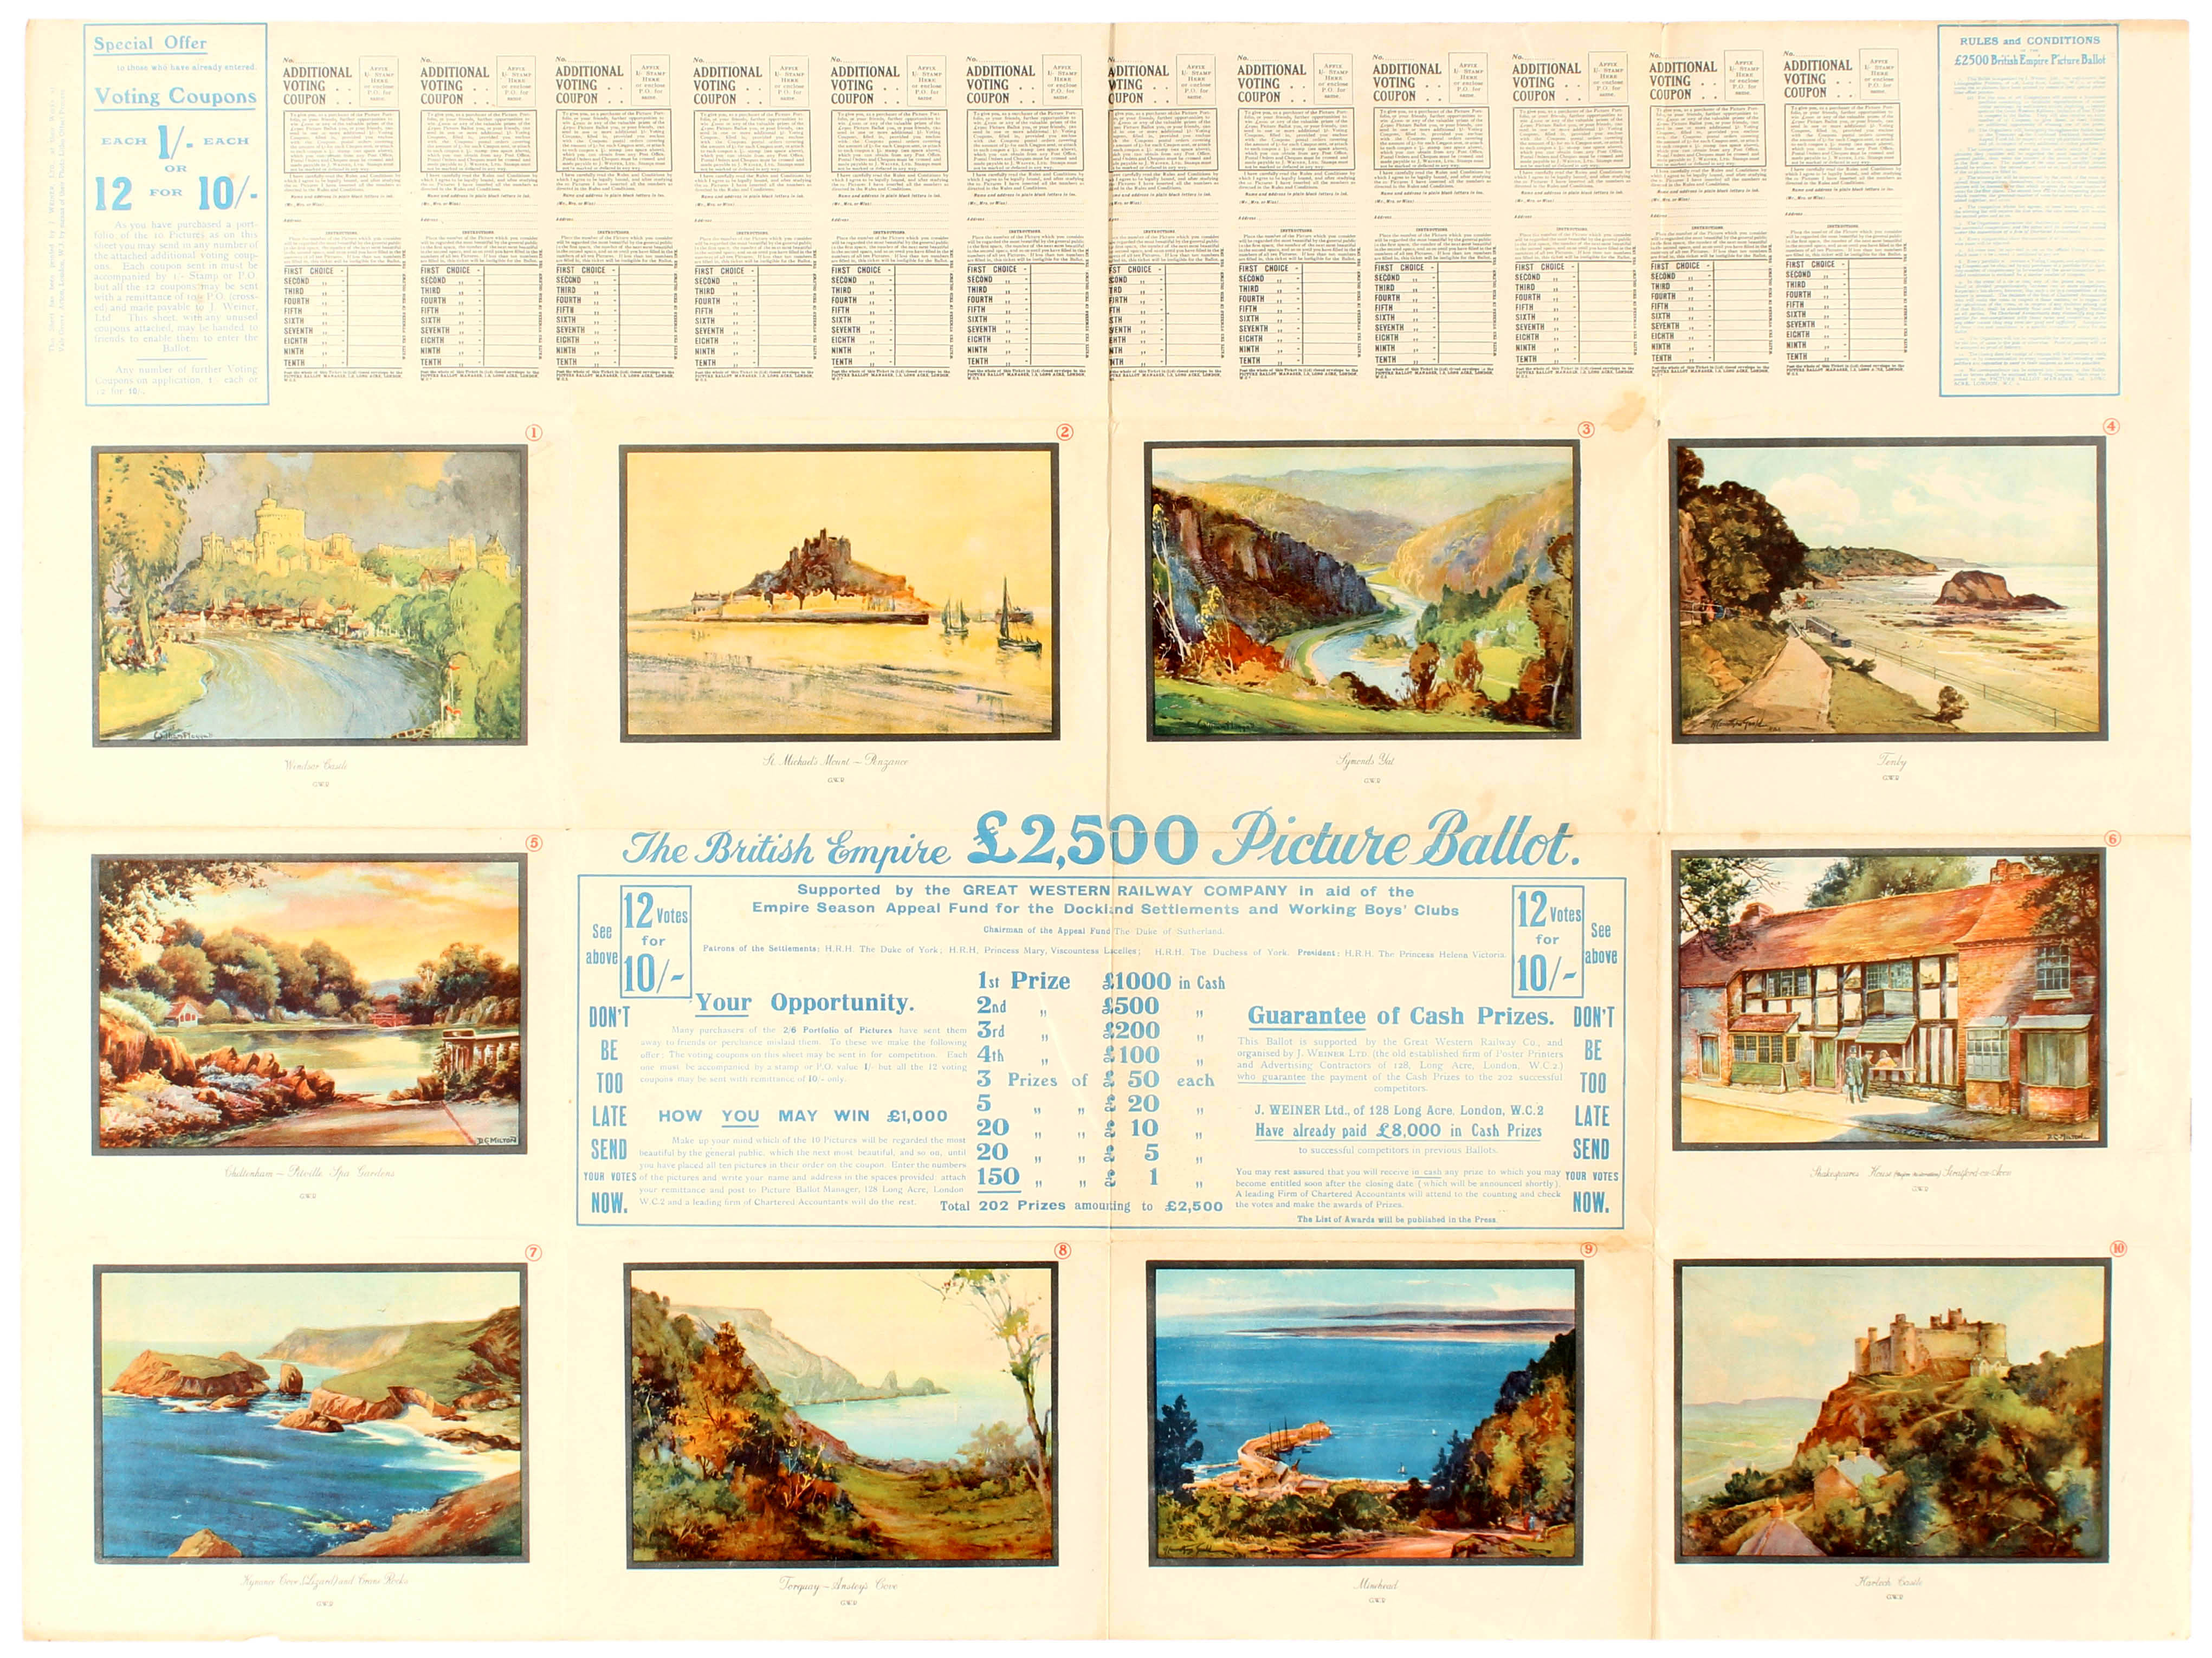 Travel Poster -The British Empire £2500 Picture Ballot